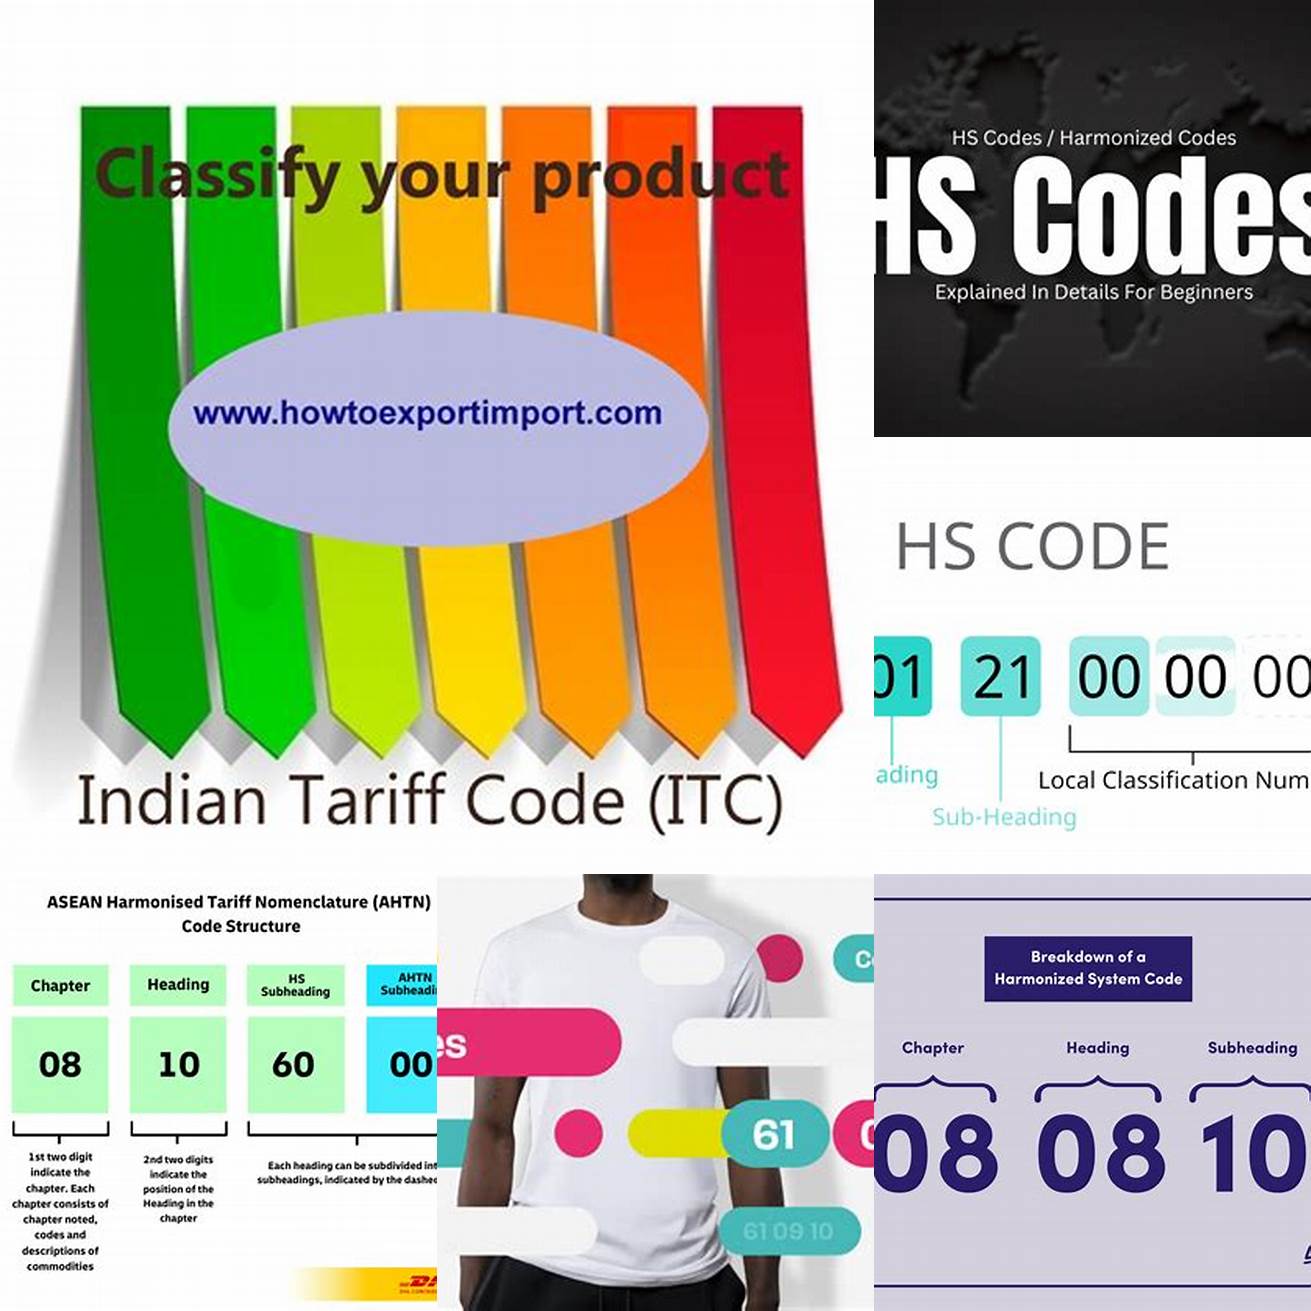 HS Code